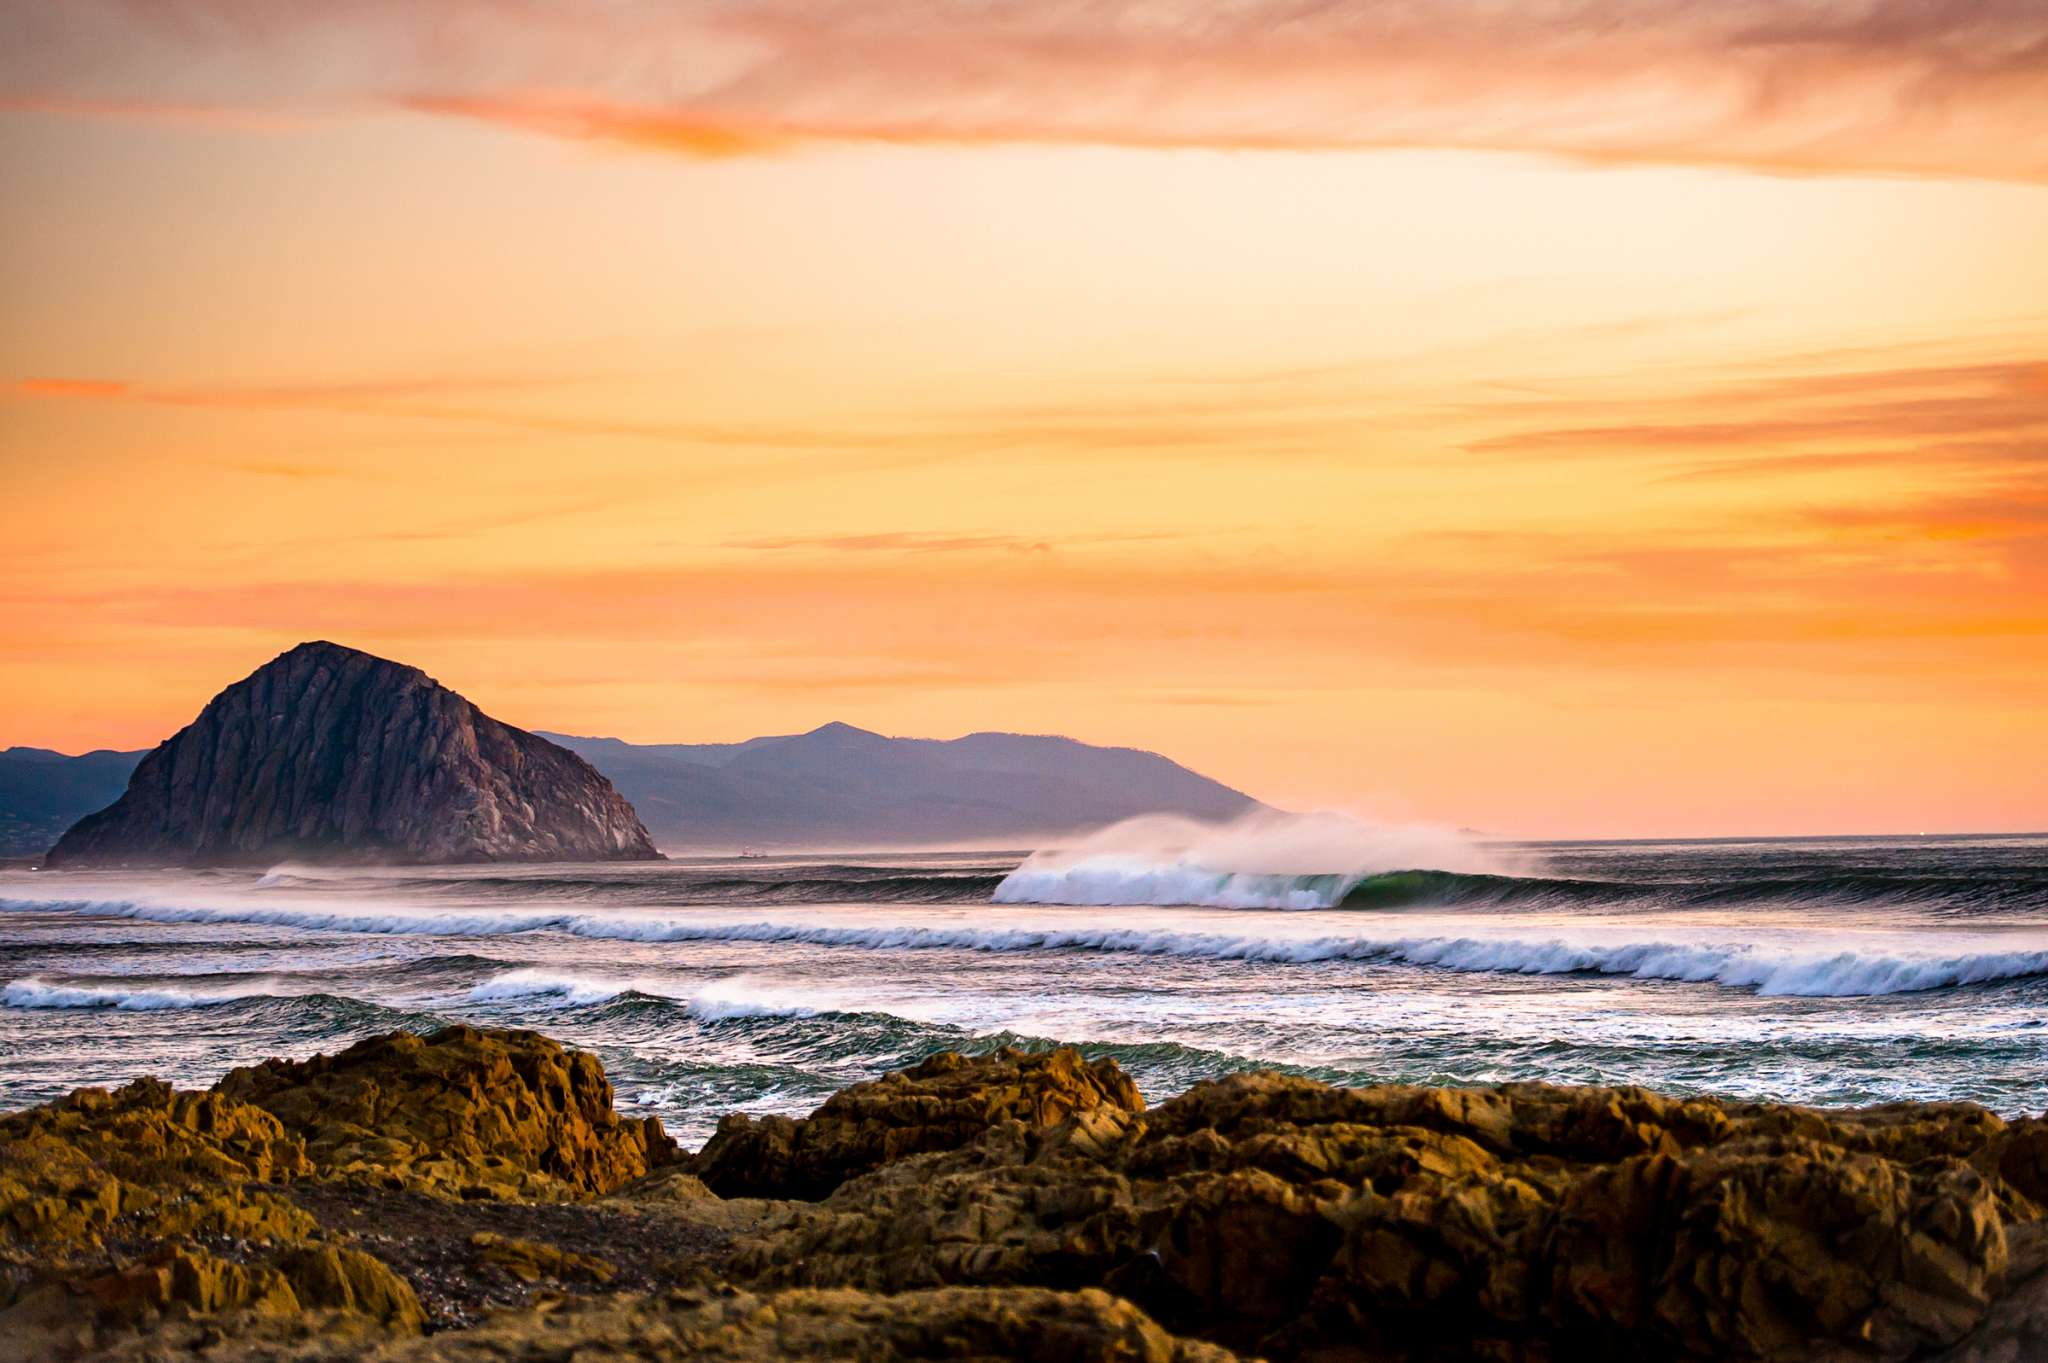 coast central burkard california landscape chris photographers peril magazine surfer surf obispo san rock lens skillshare imgur mustang water luis